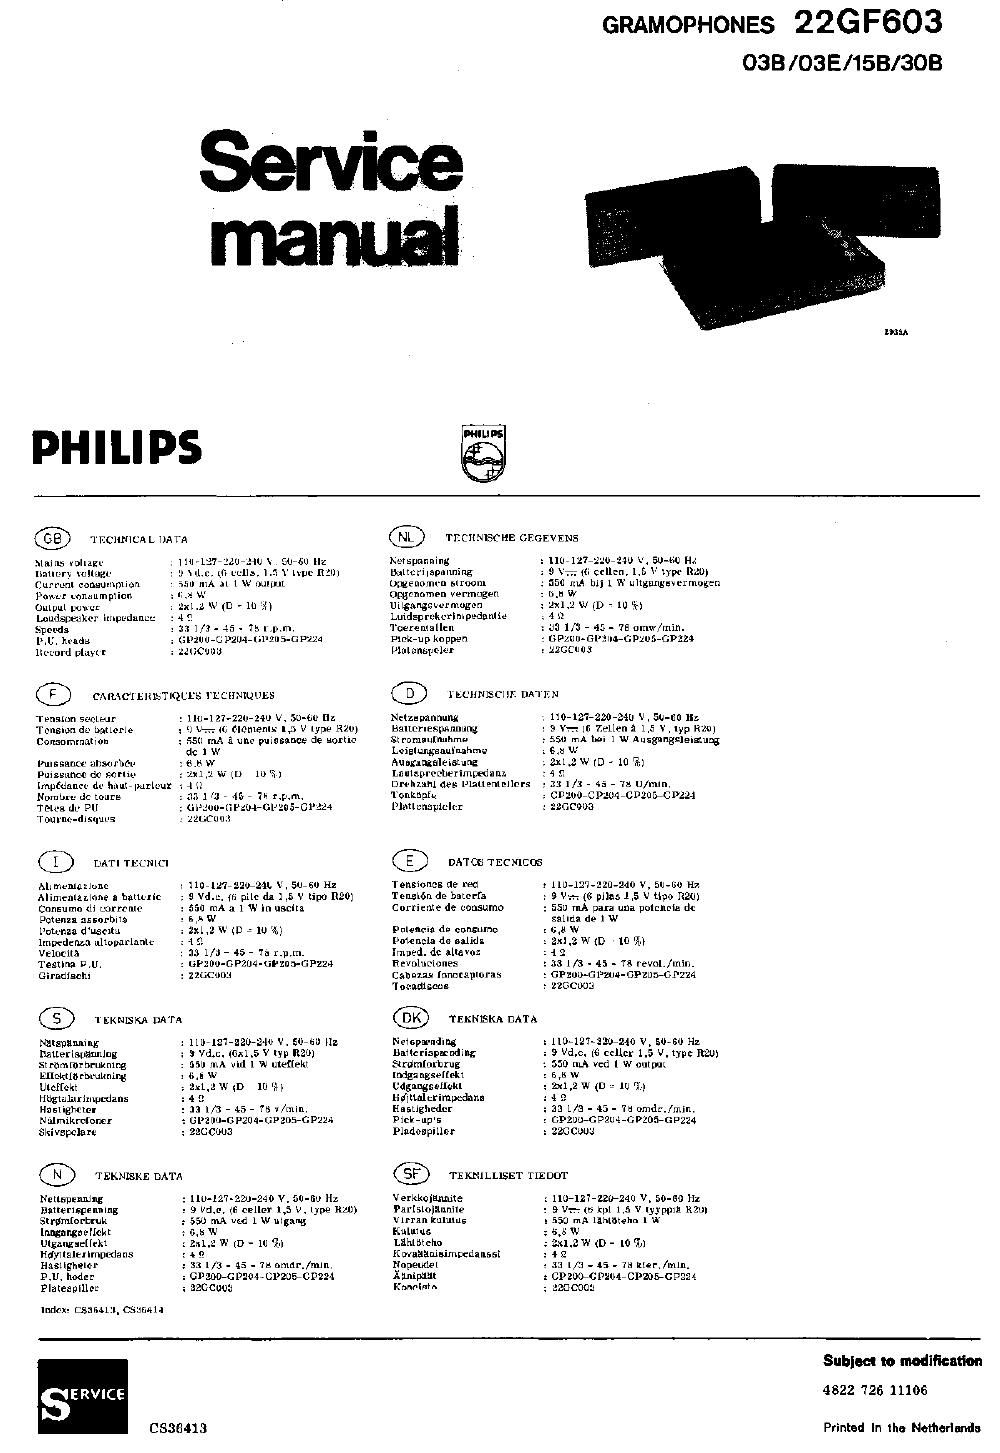 philips 22 gf 603 service manual